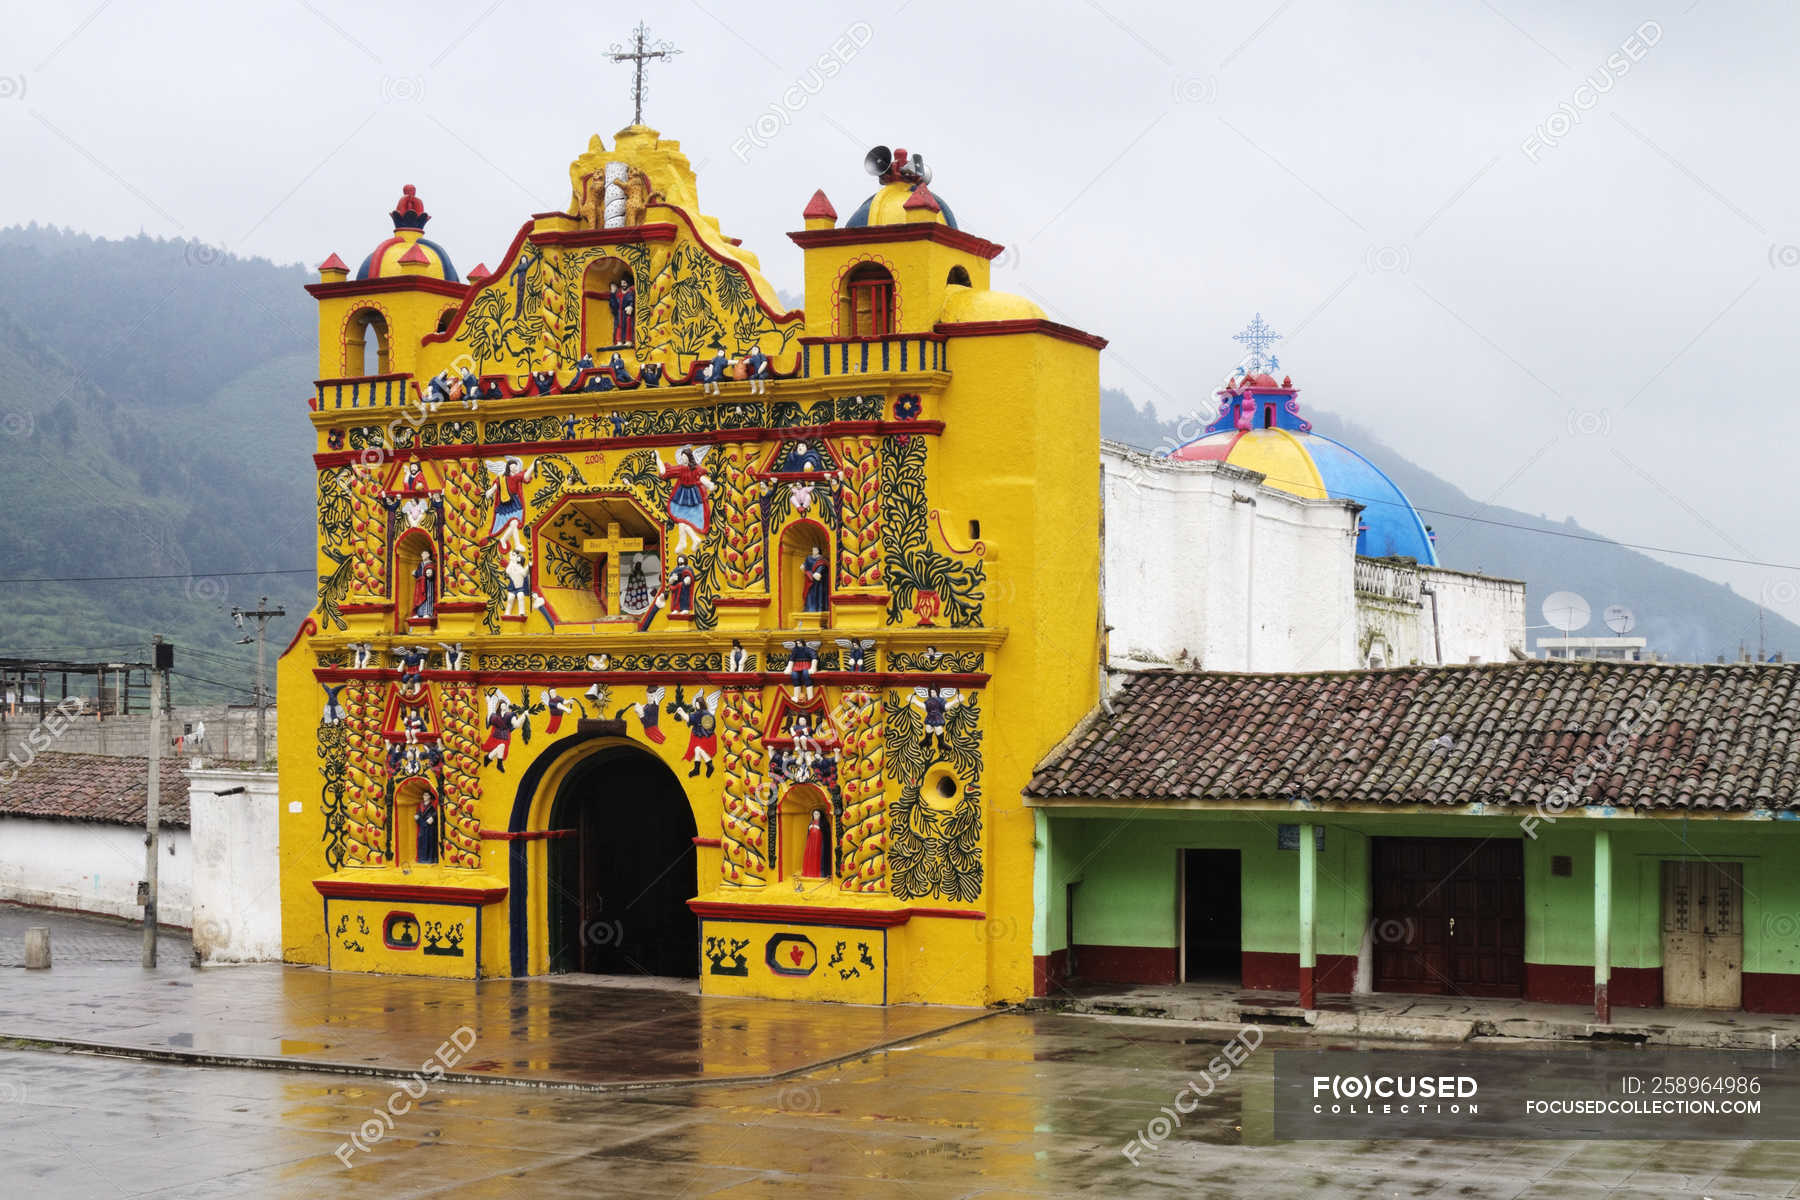 Chiesa colorata di San Andres Xecul San Andres Xecul, Guatemala — esterno, telecomando - Stock Photo | #258964986